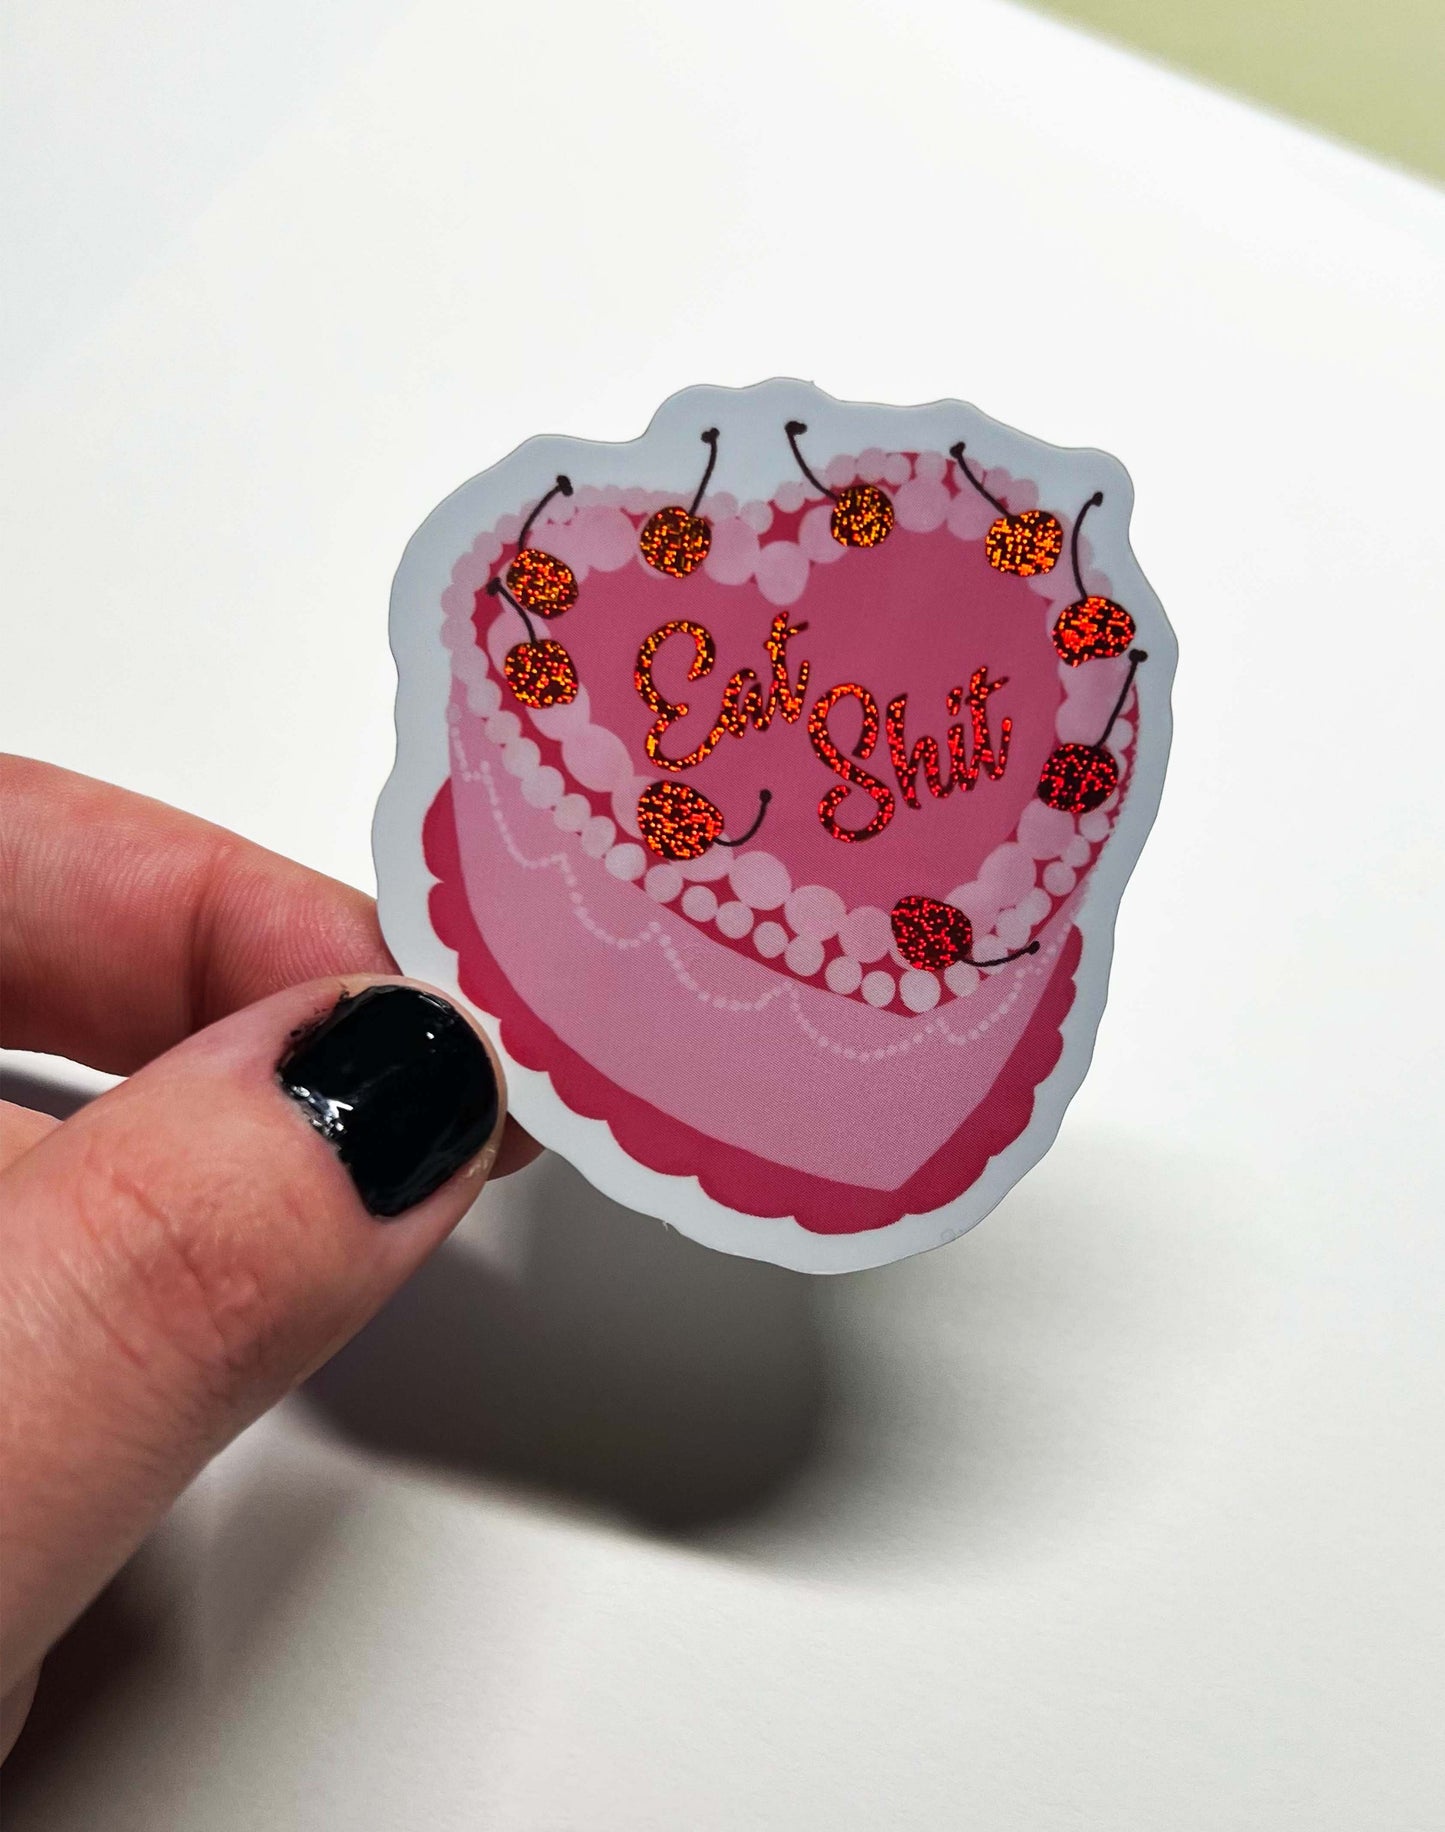 "Eat Shit" Sparkle Cake Sticker